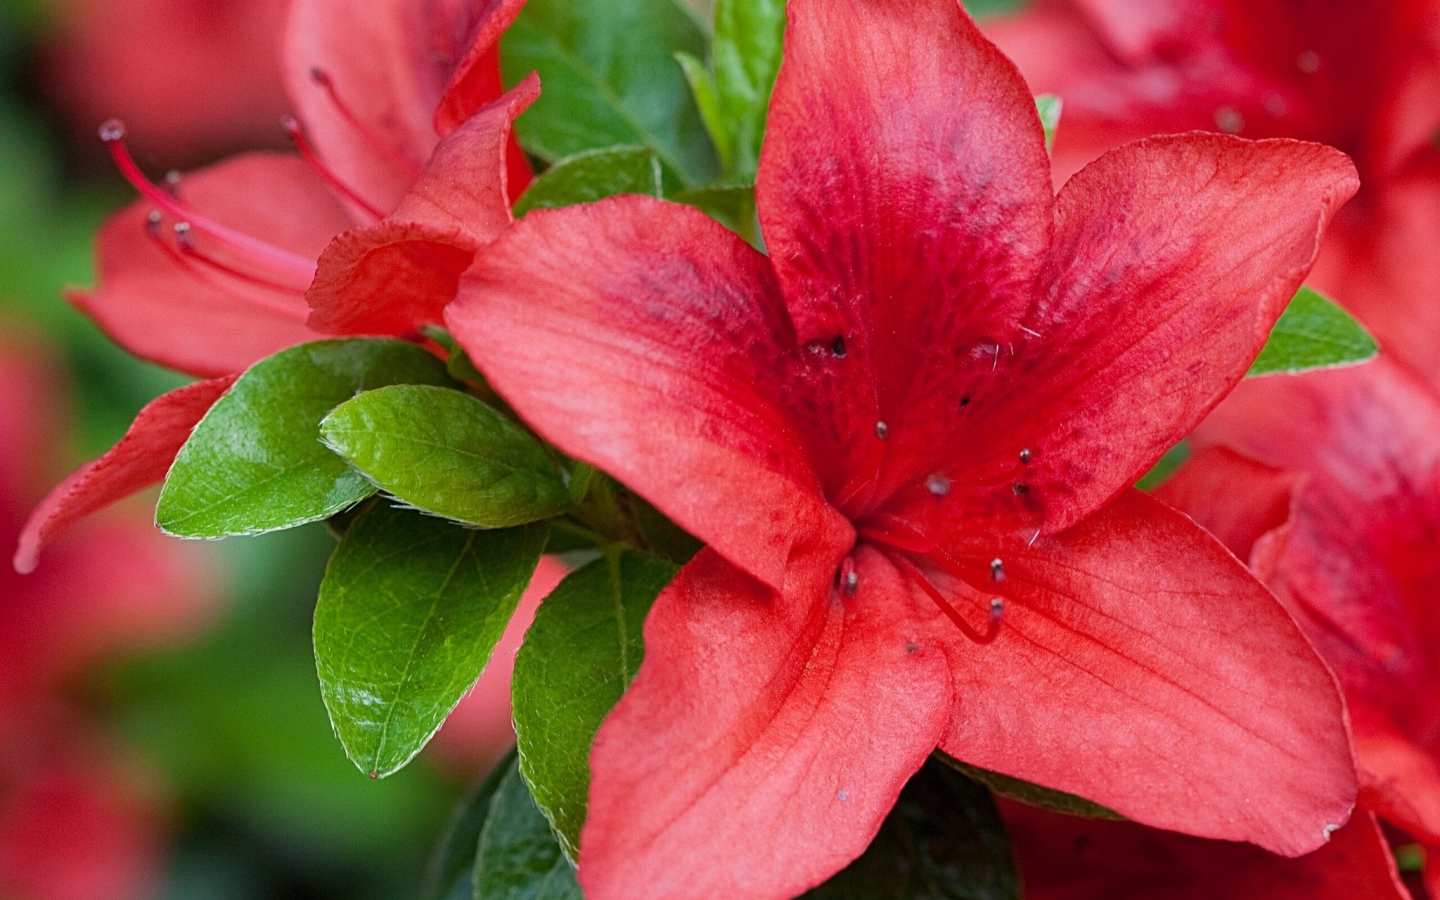 Beautiful red azalea flower closeup